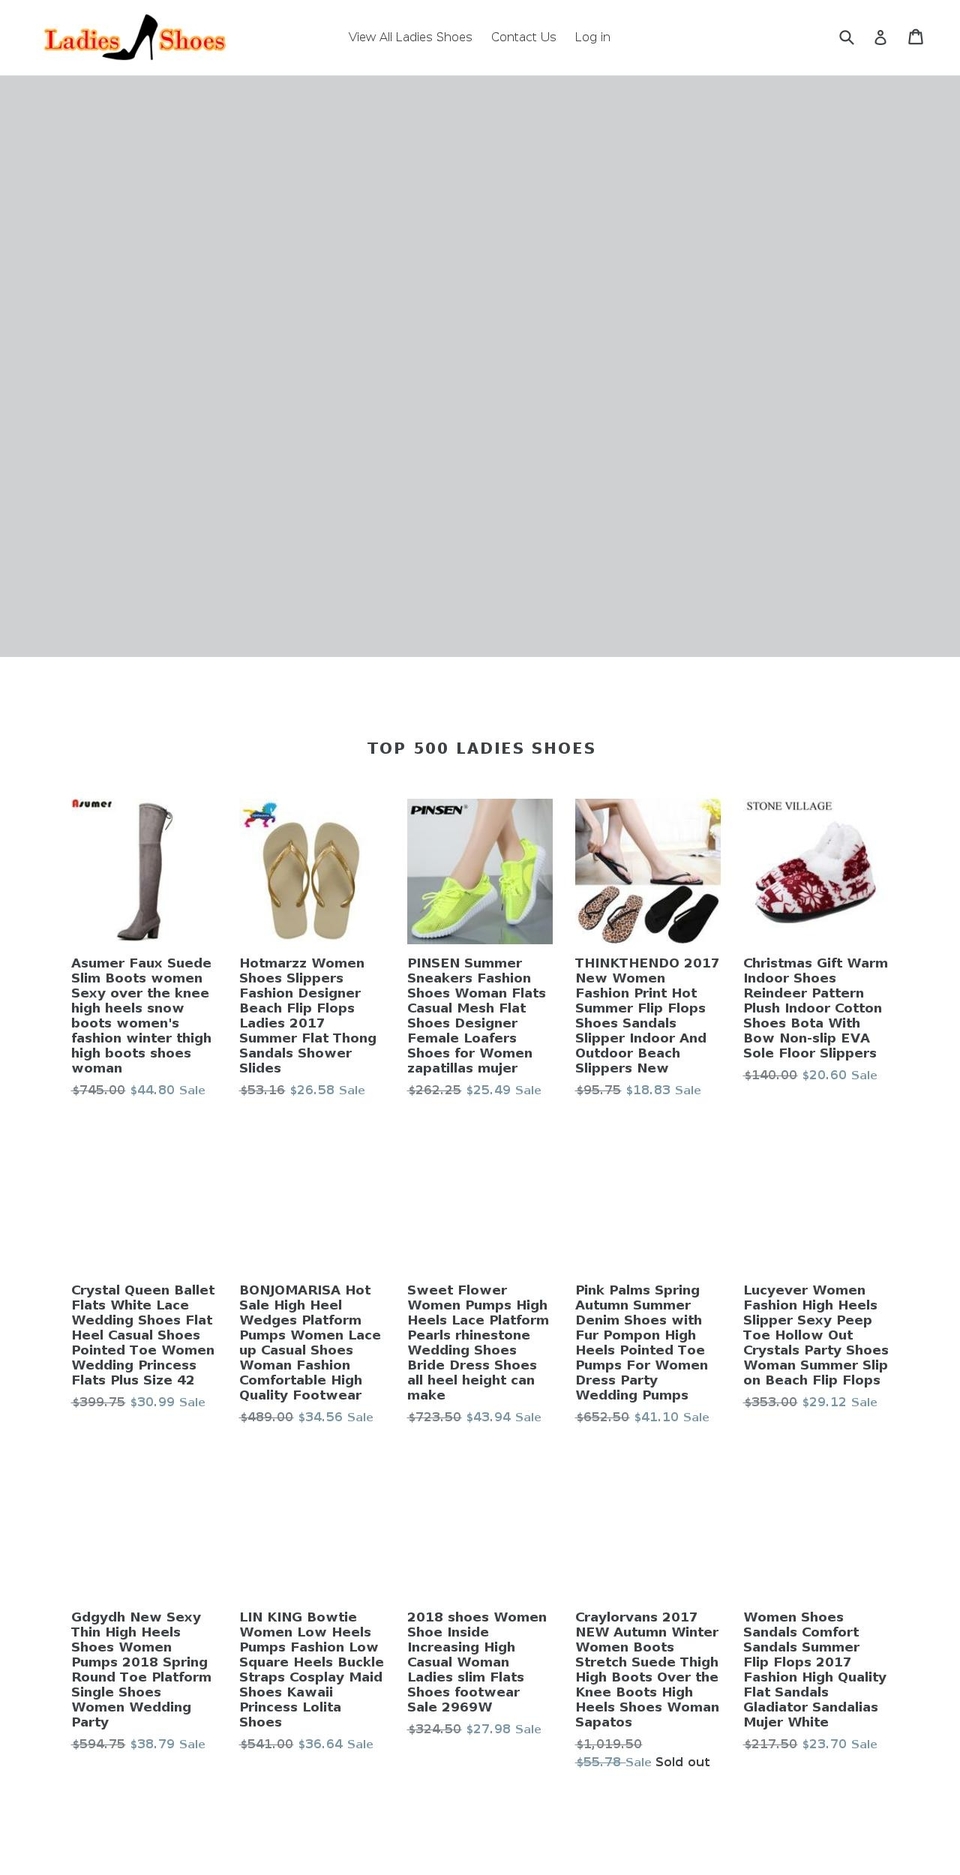 ladiesshoes.xyz shopify website screenshot